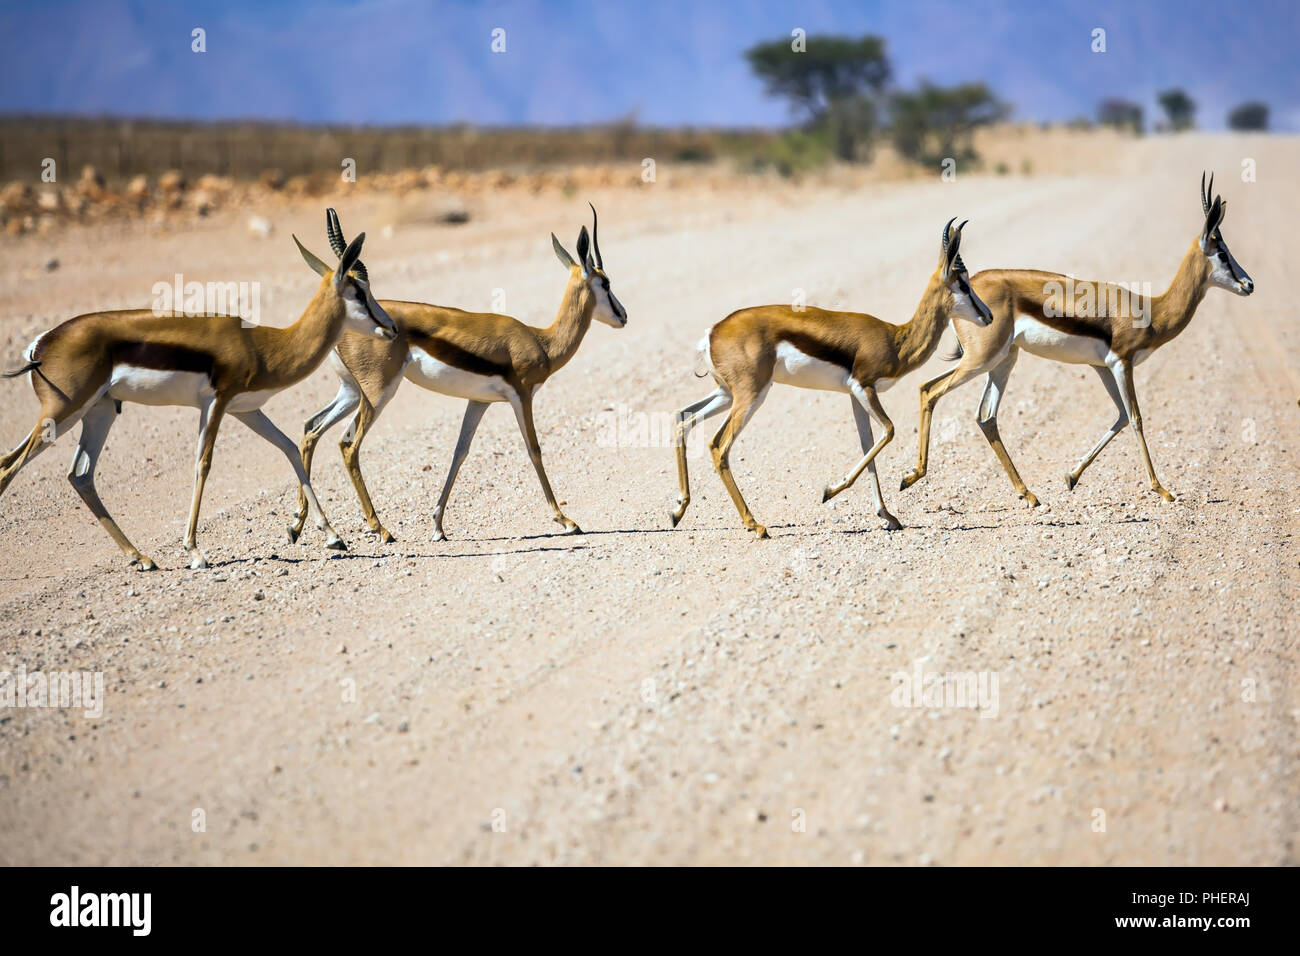 Small herd of impala antelopes cross the road Stock Photo